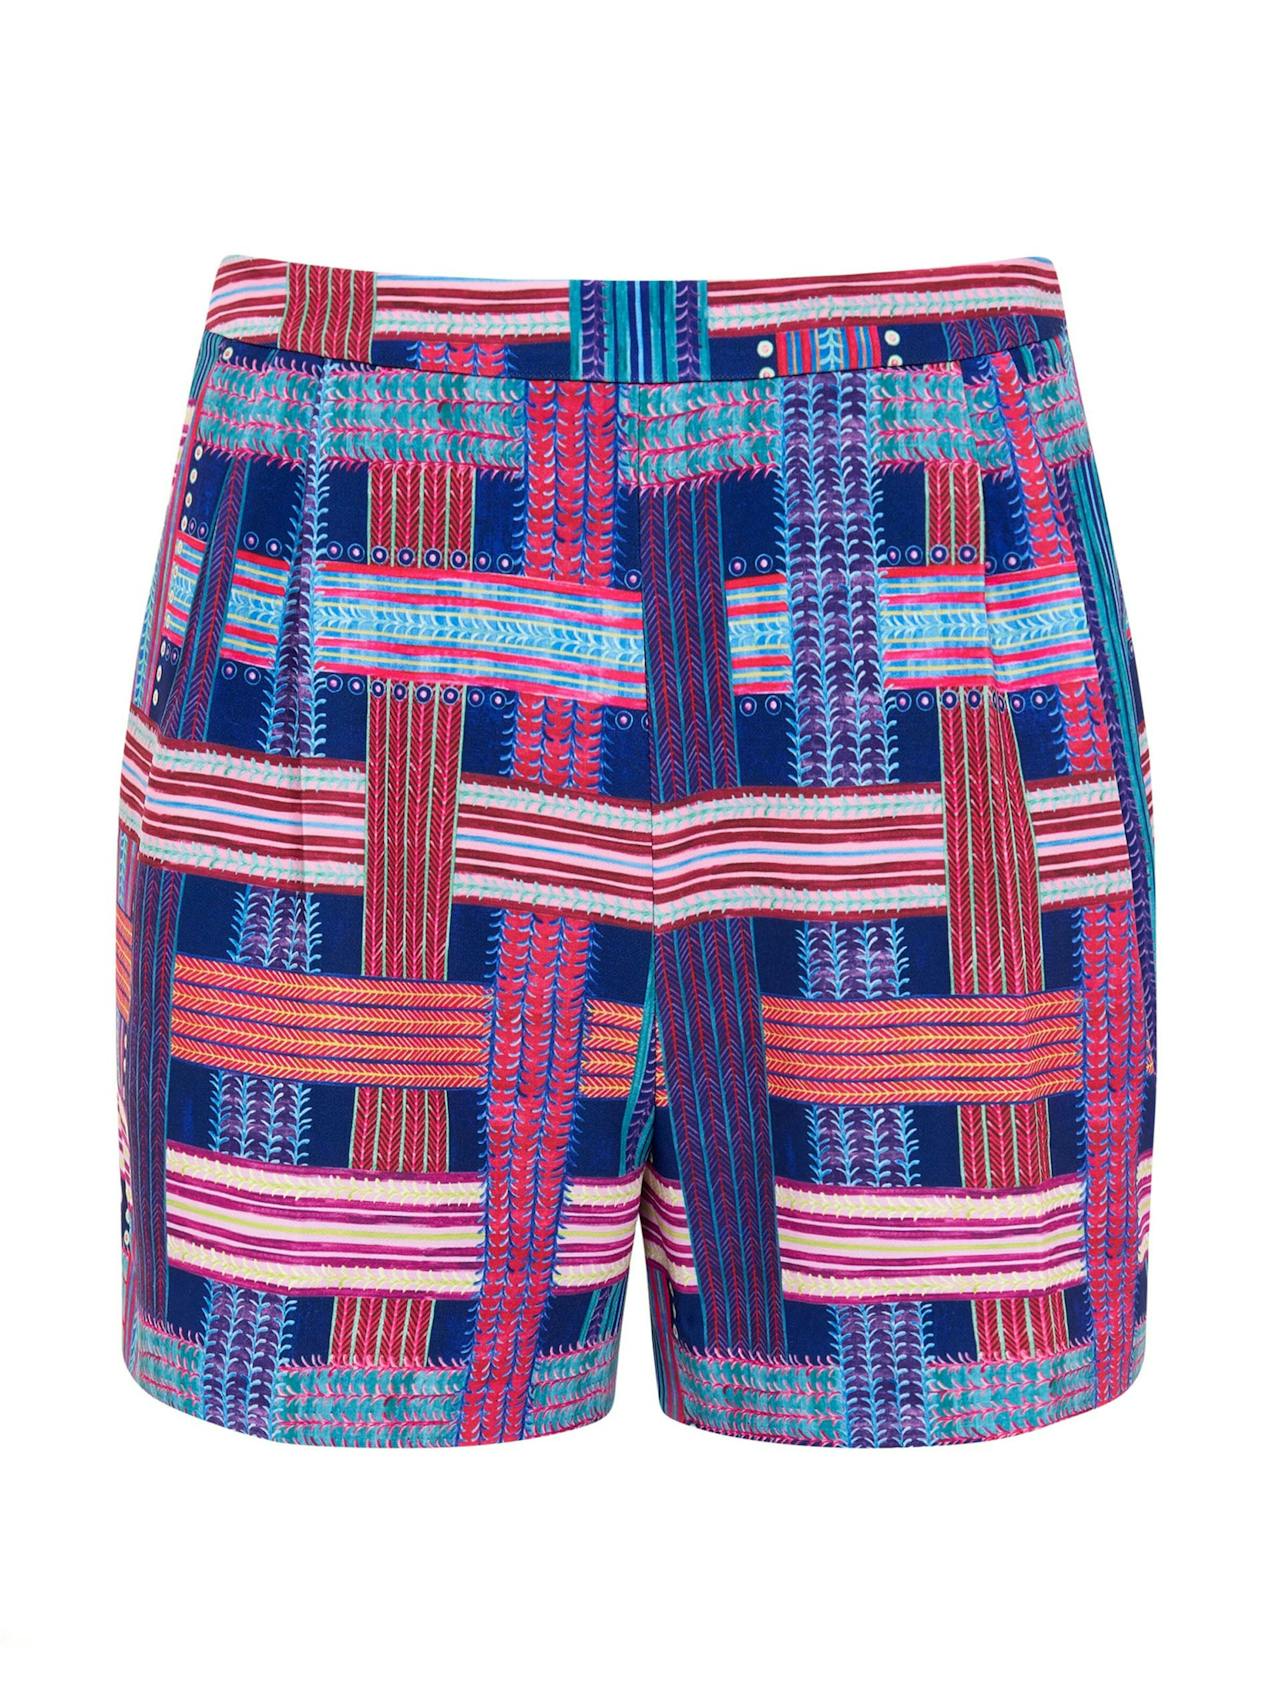 Basketweave indigo wide tailored shorts